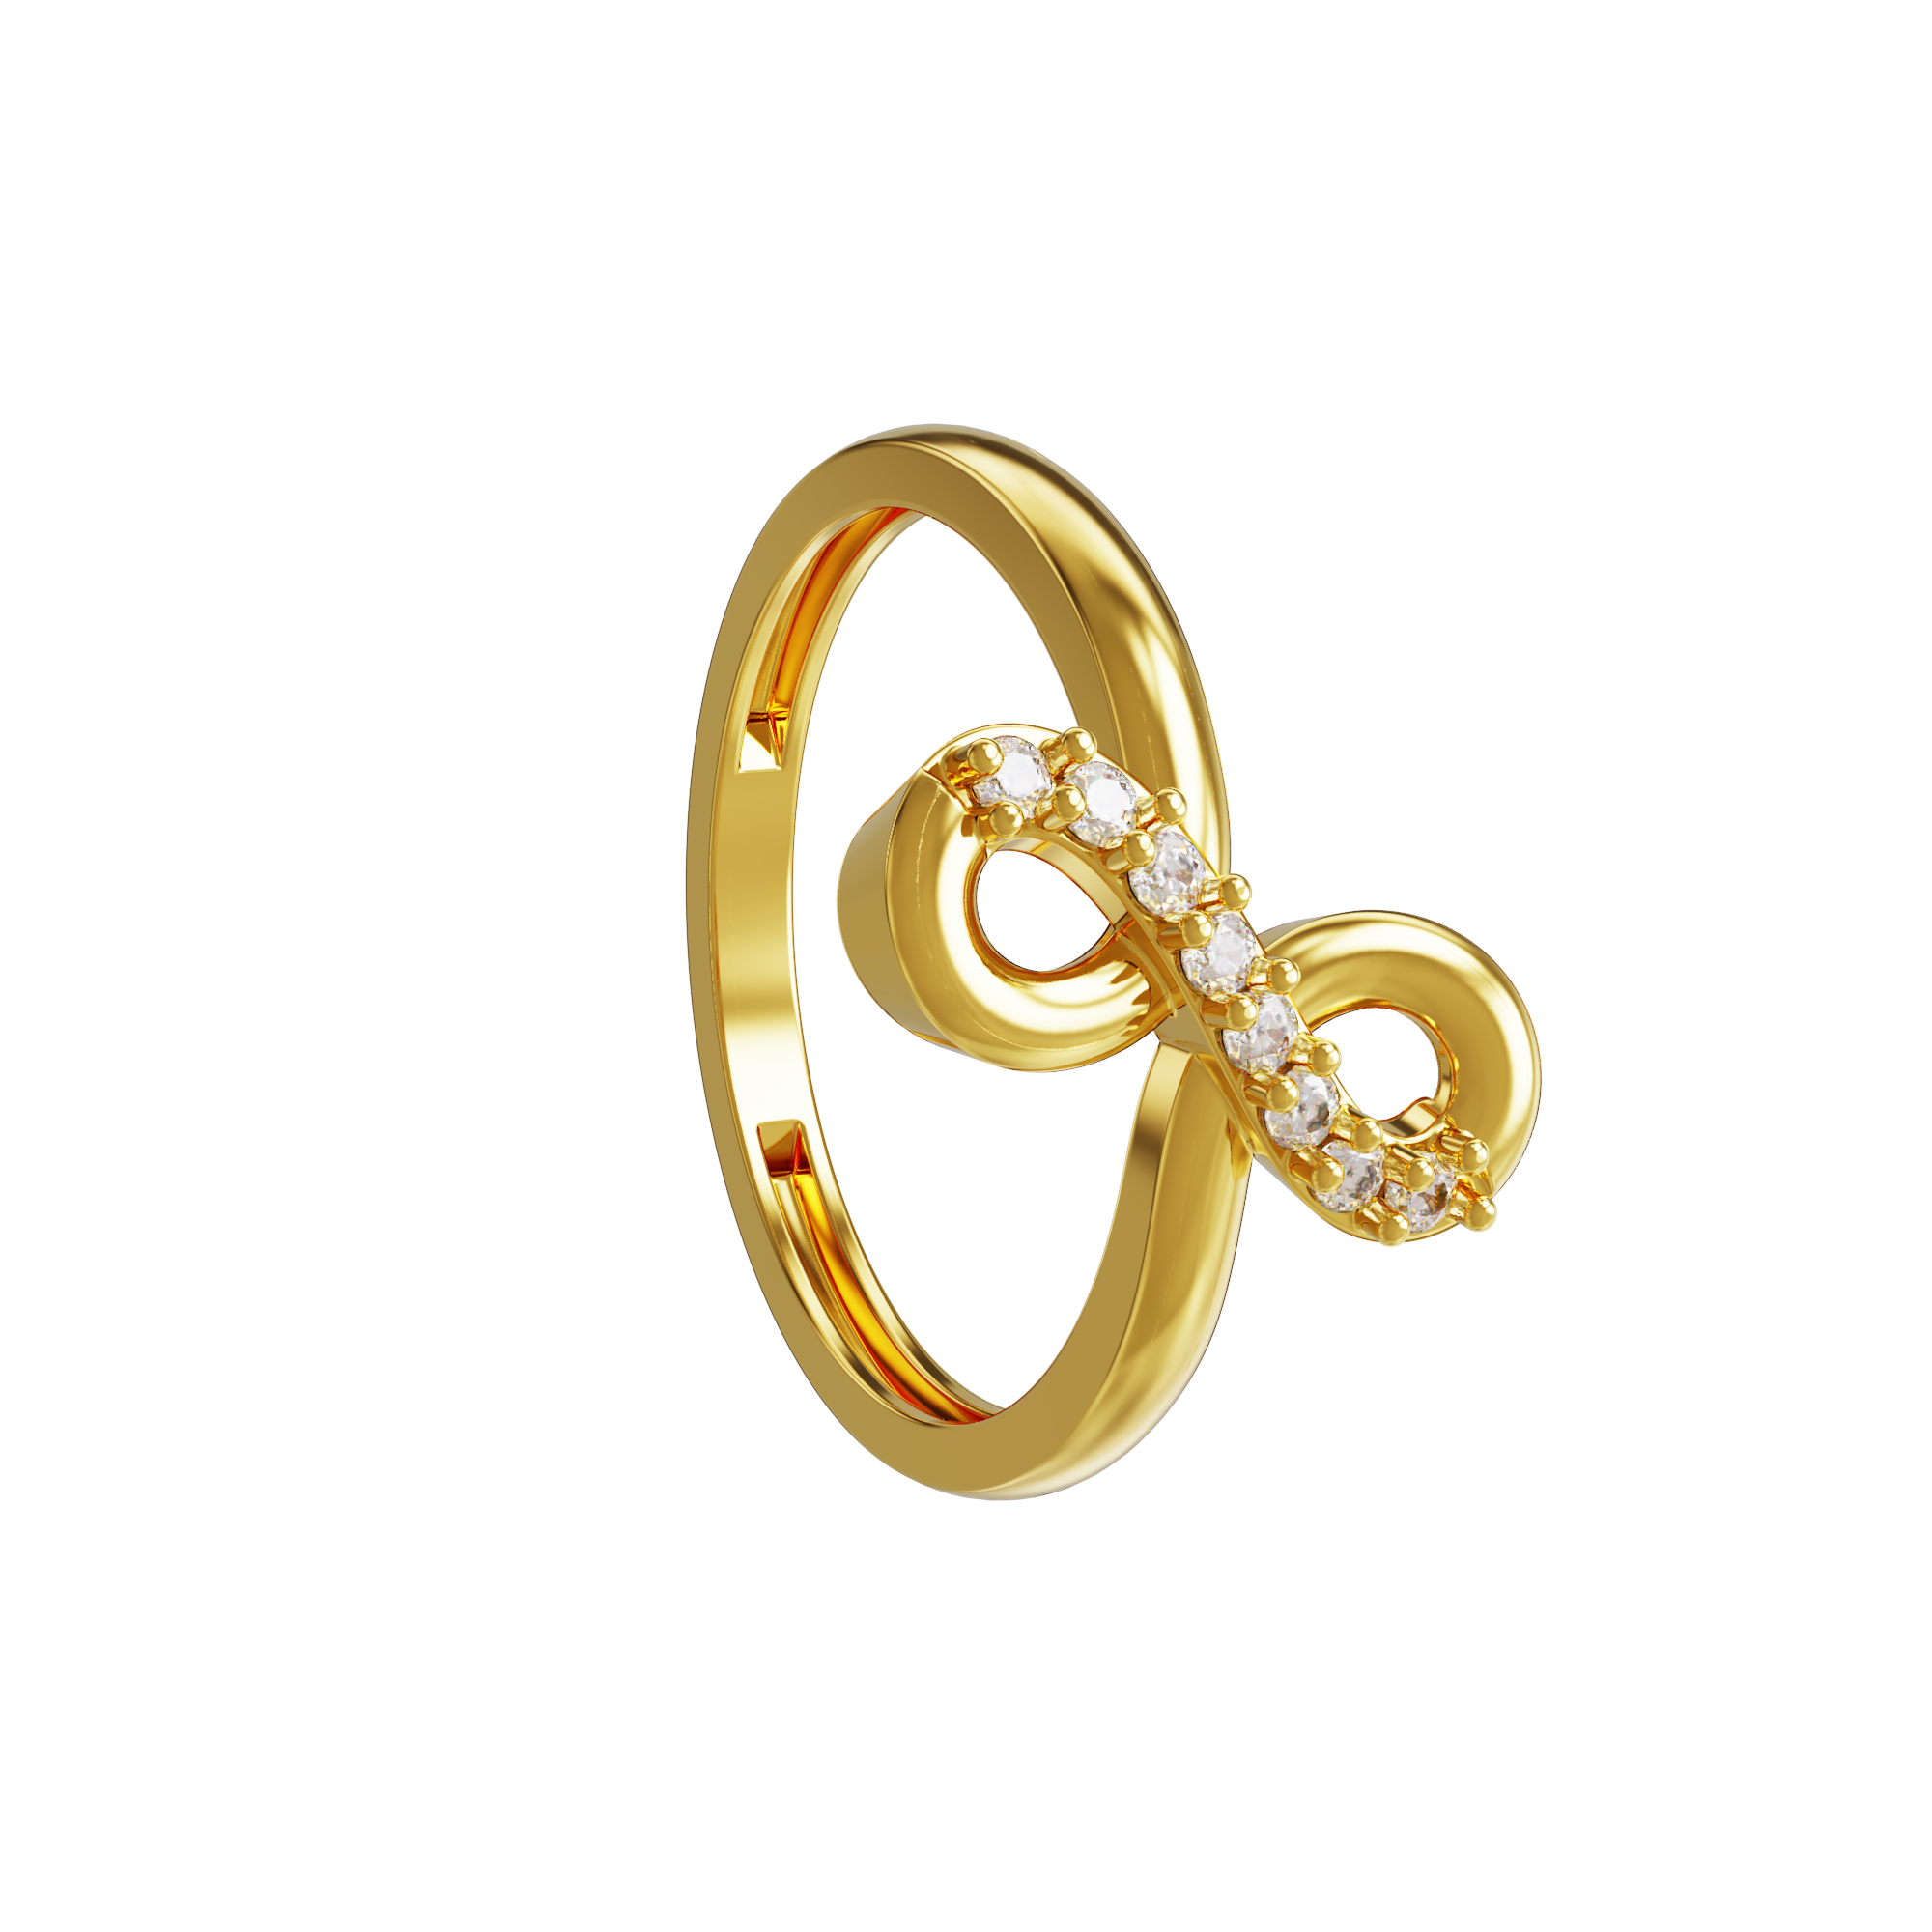 New-Generation-Gold-Ring-Design